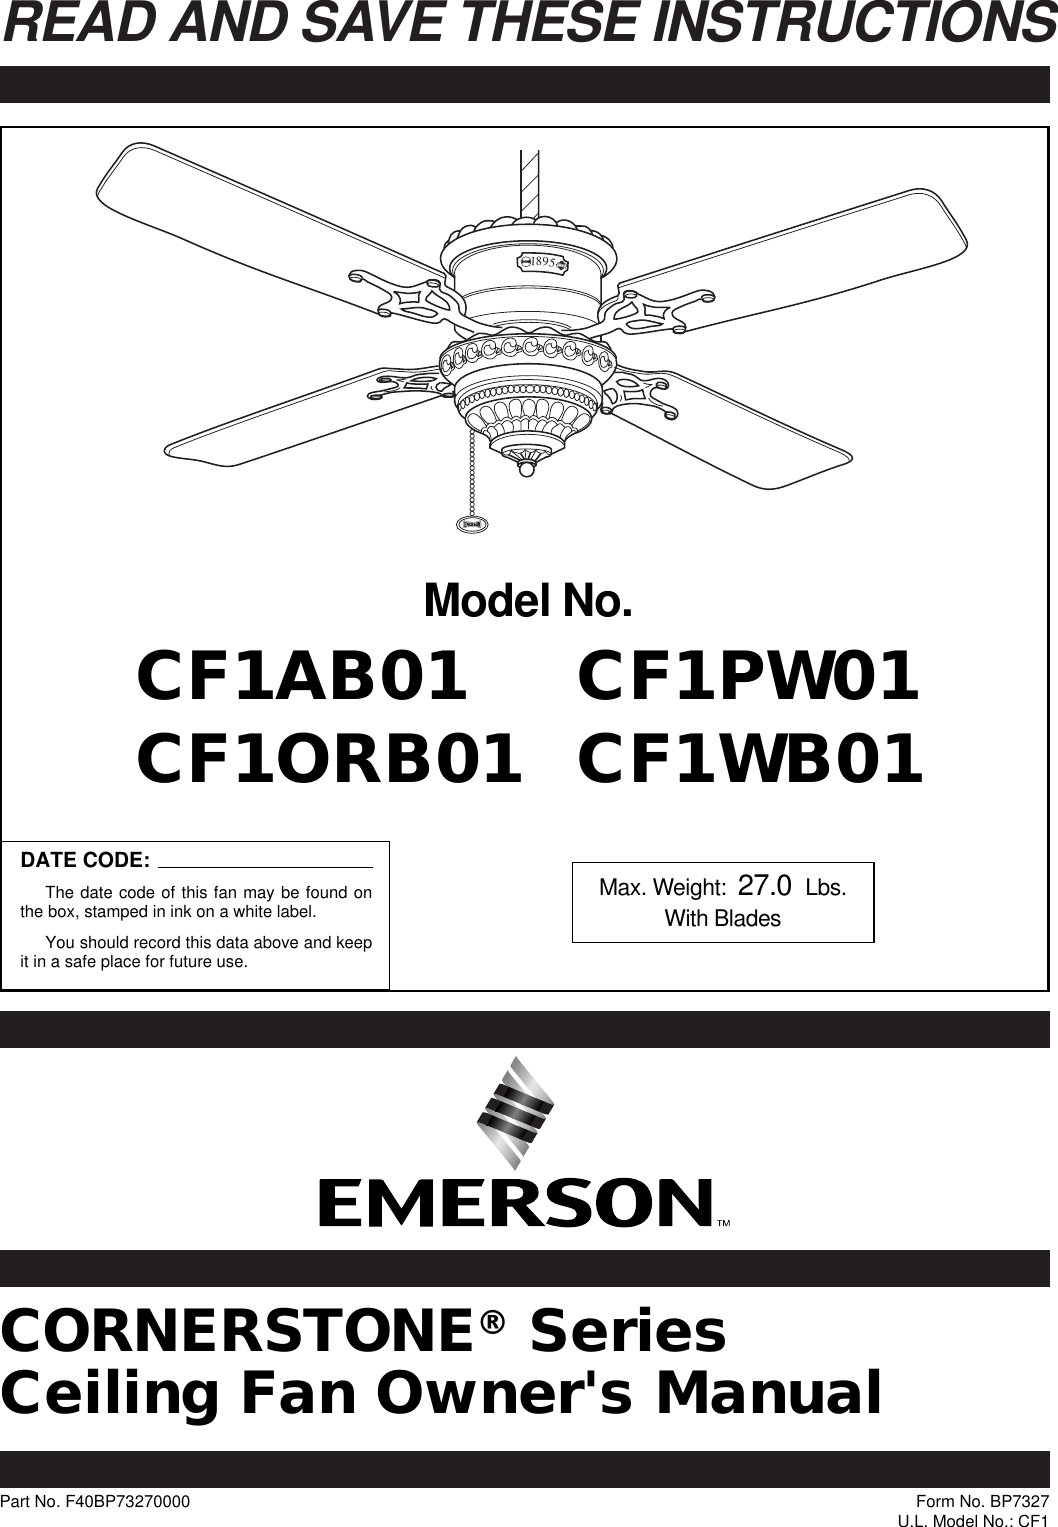 Page 1 of 12 - Emerson Emerson-Cornerstone-Cf1Orb01-Users-Manual- BP7250 CF1 Owner's Manual  Emerson-cornerstone-cf1orb01-users-manual